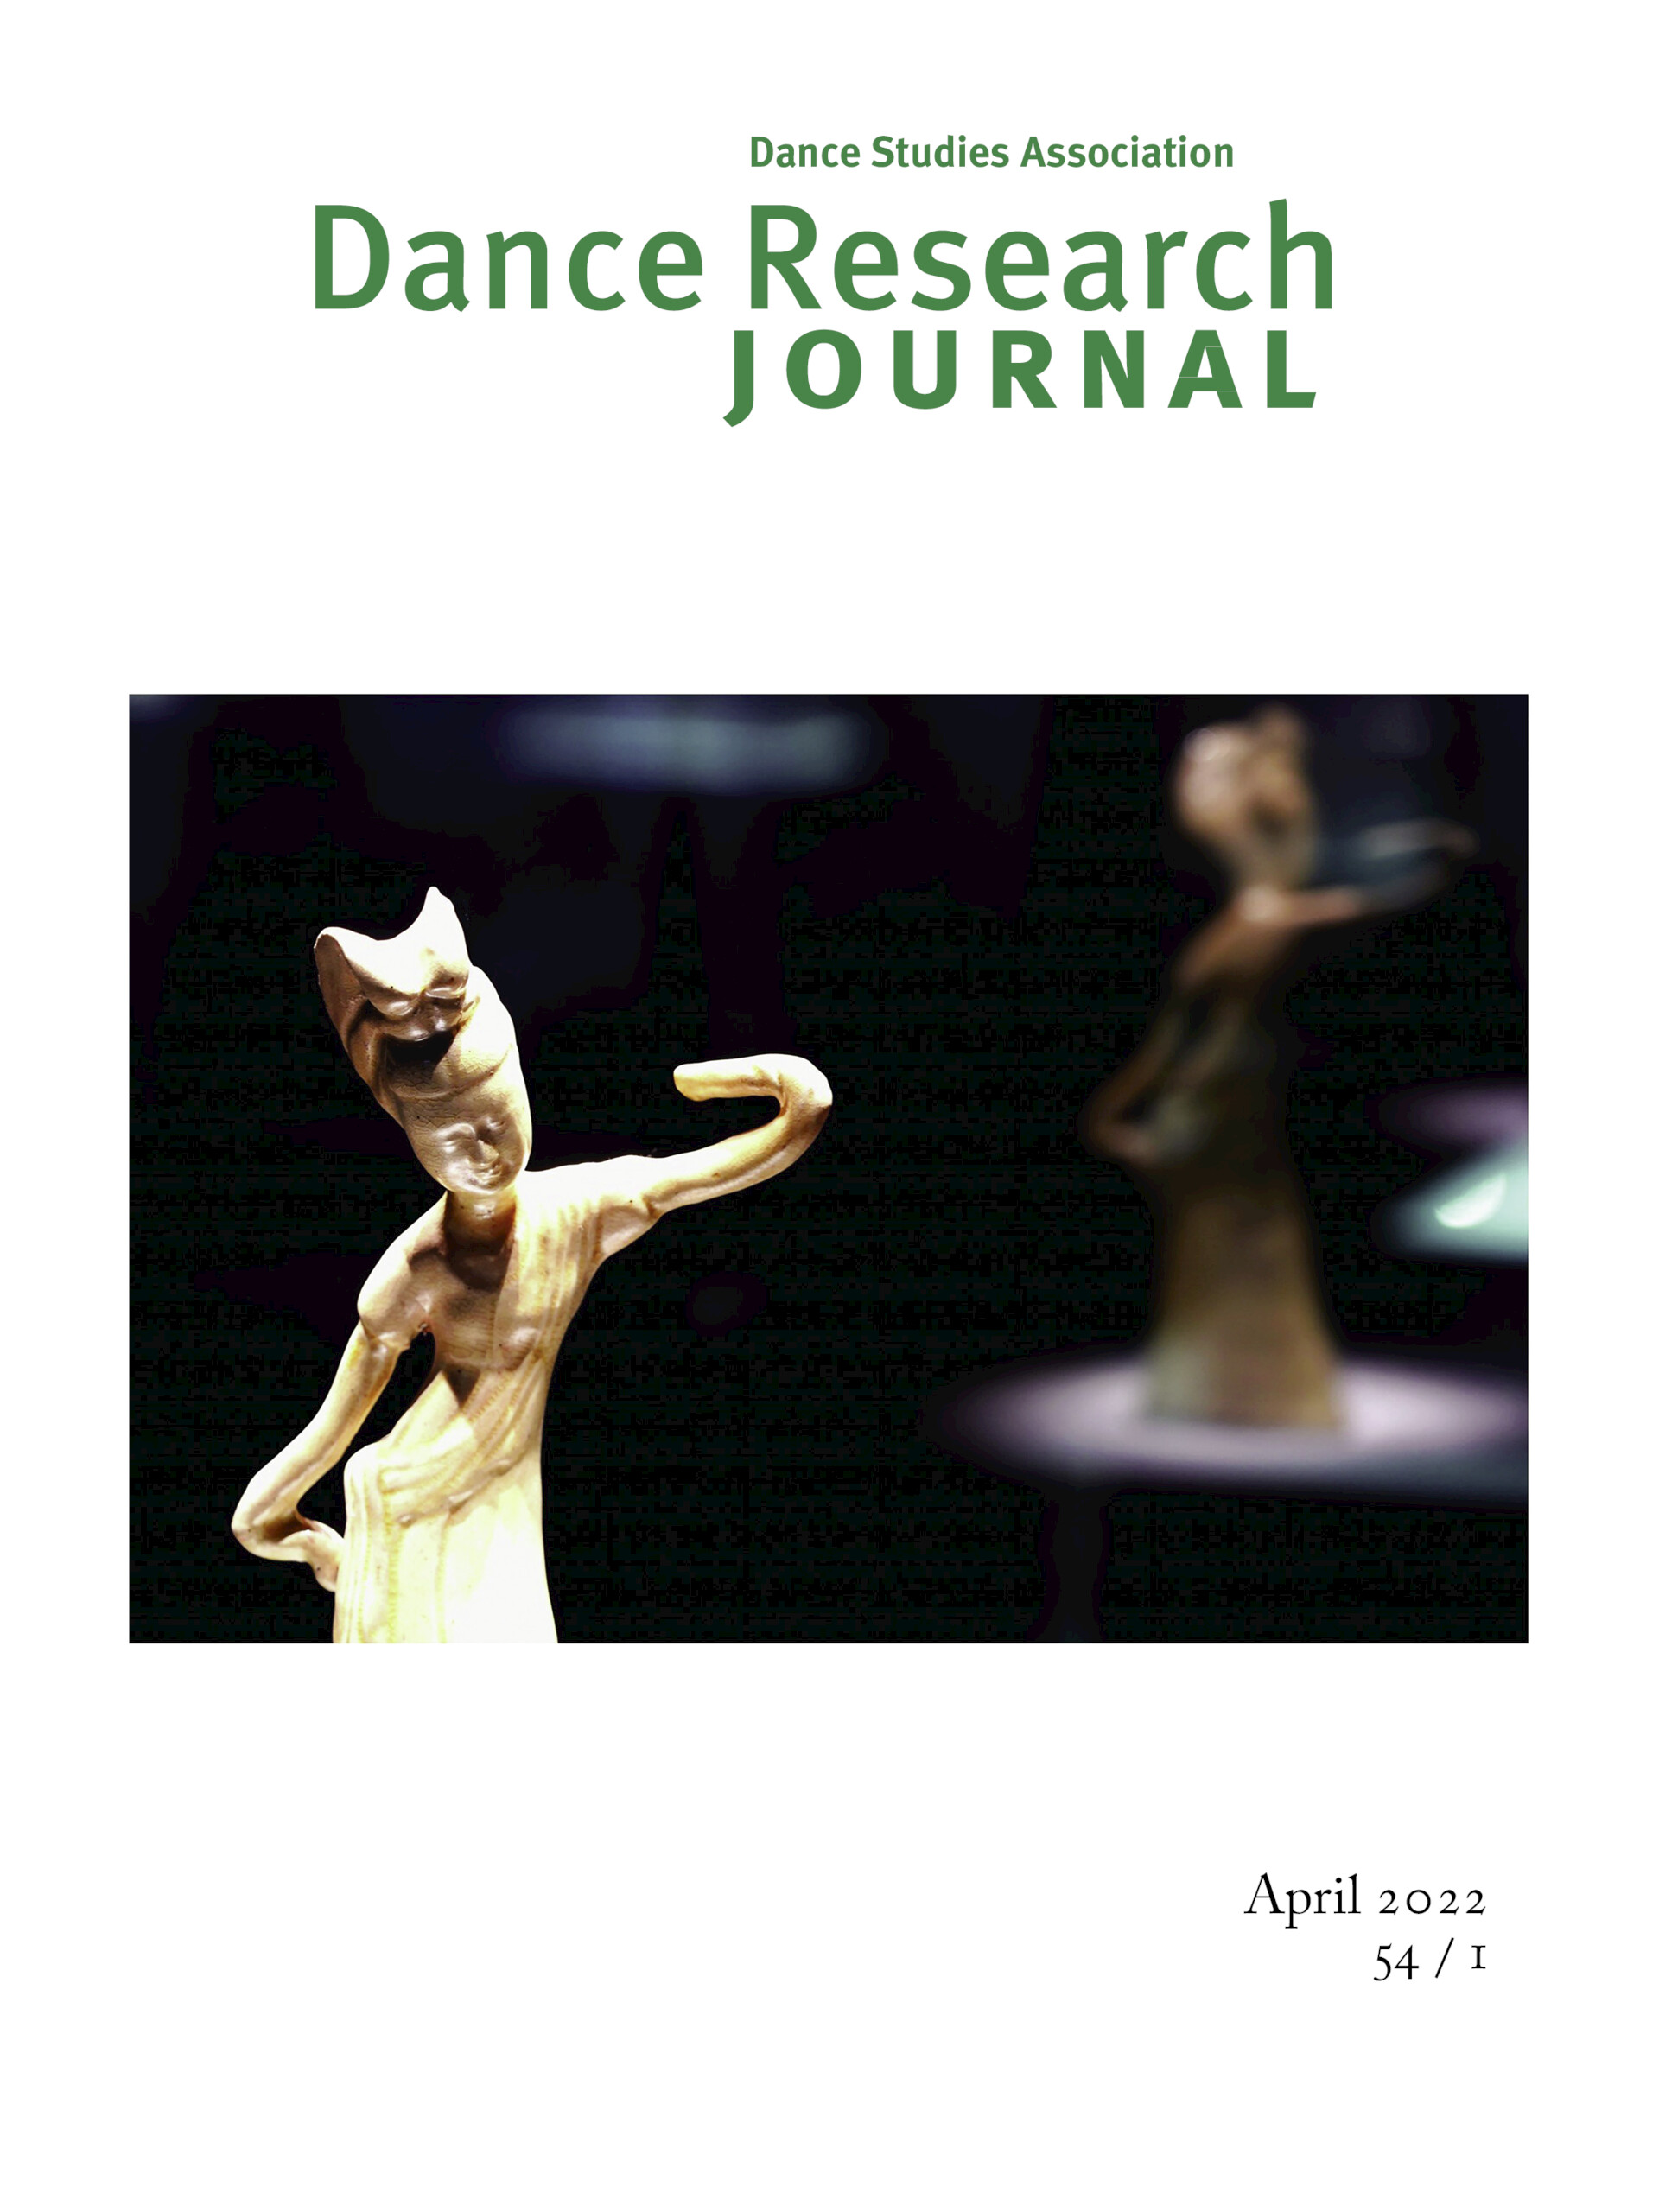 ritual dance research paper